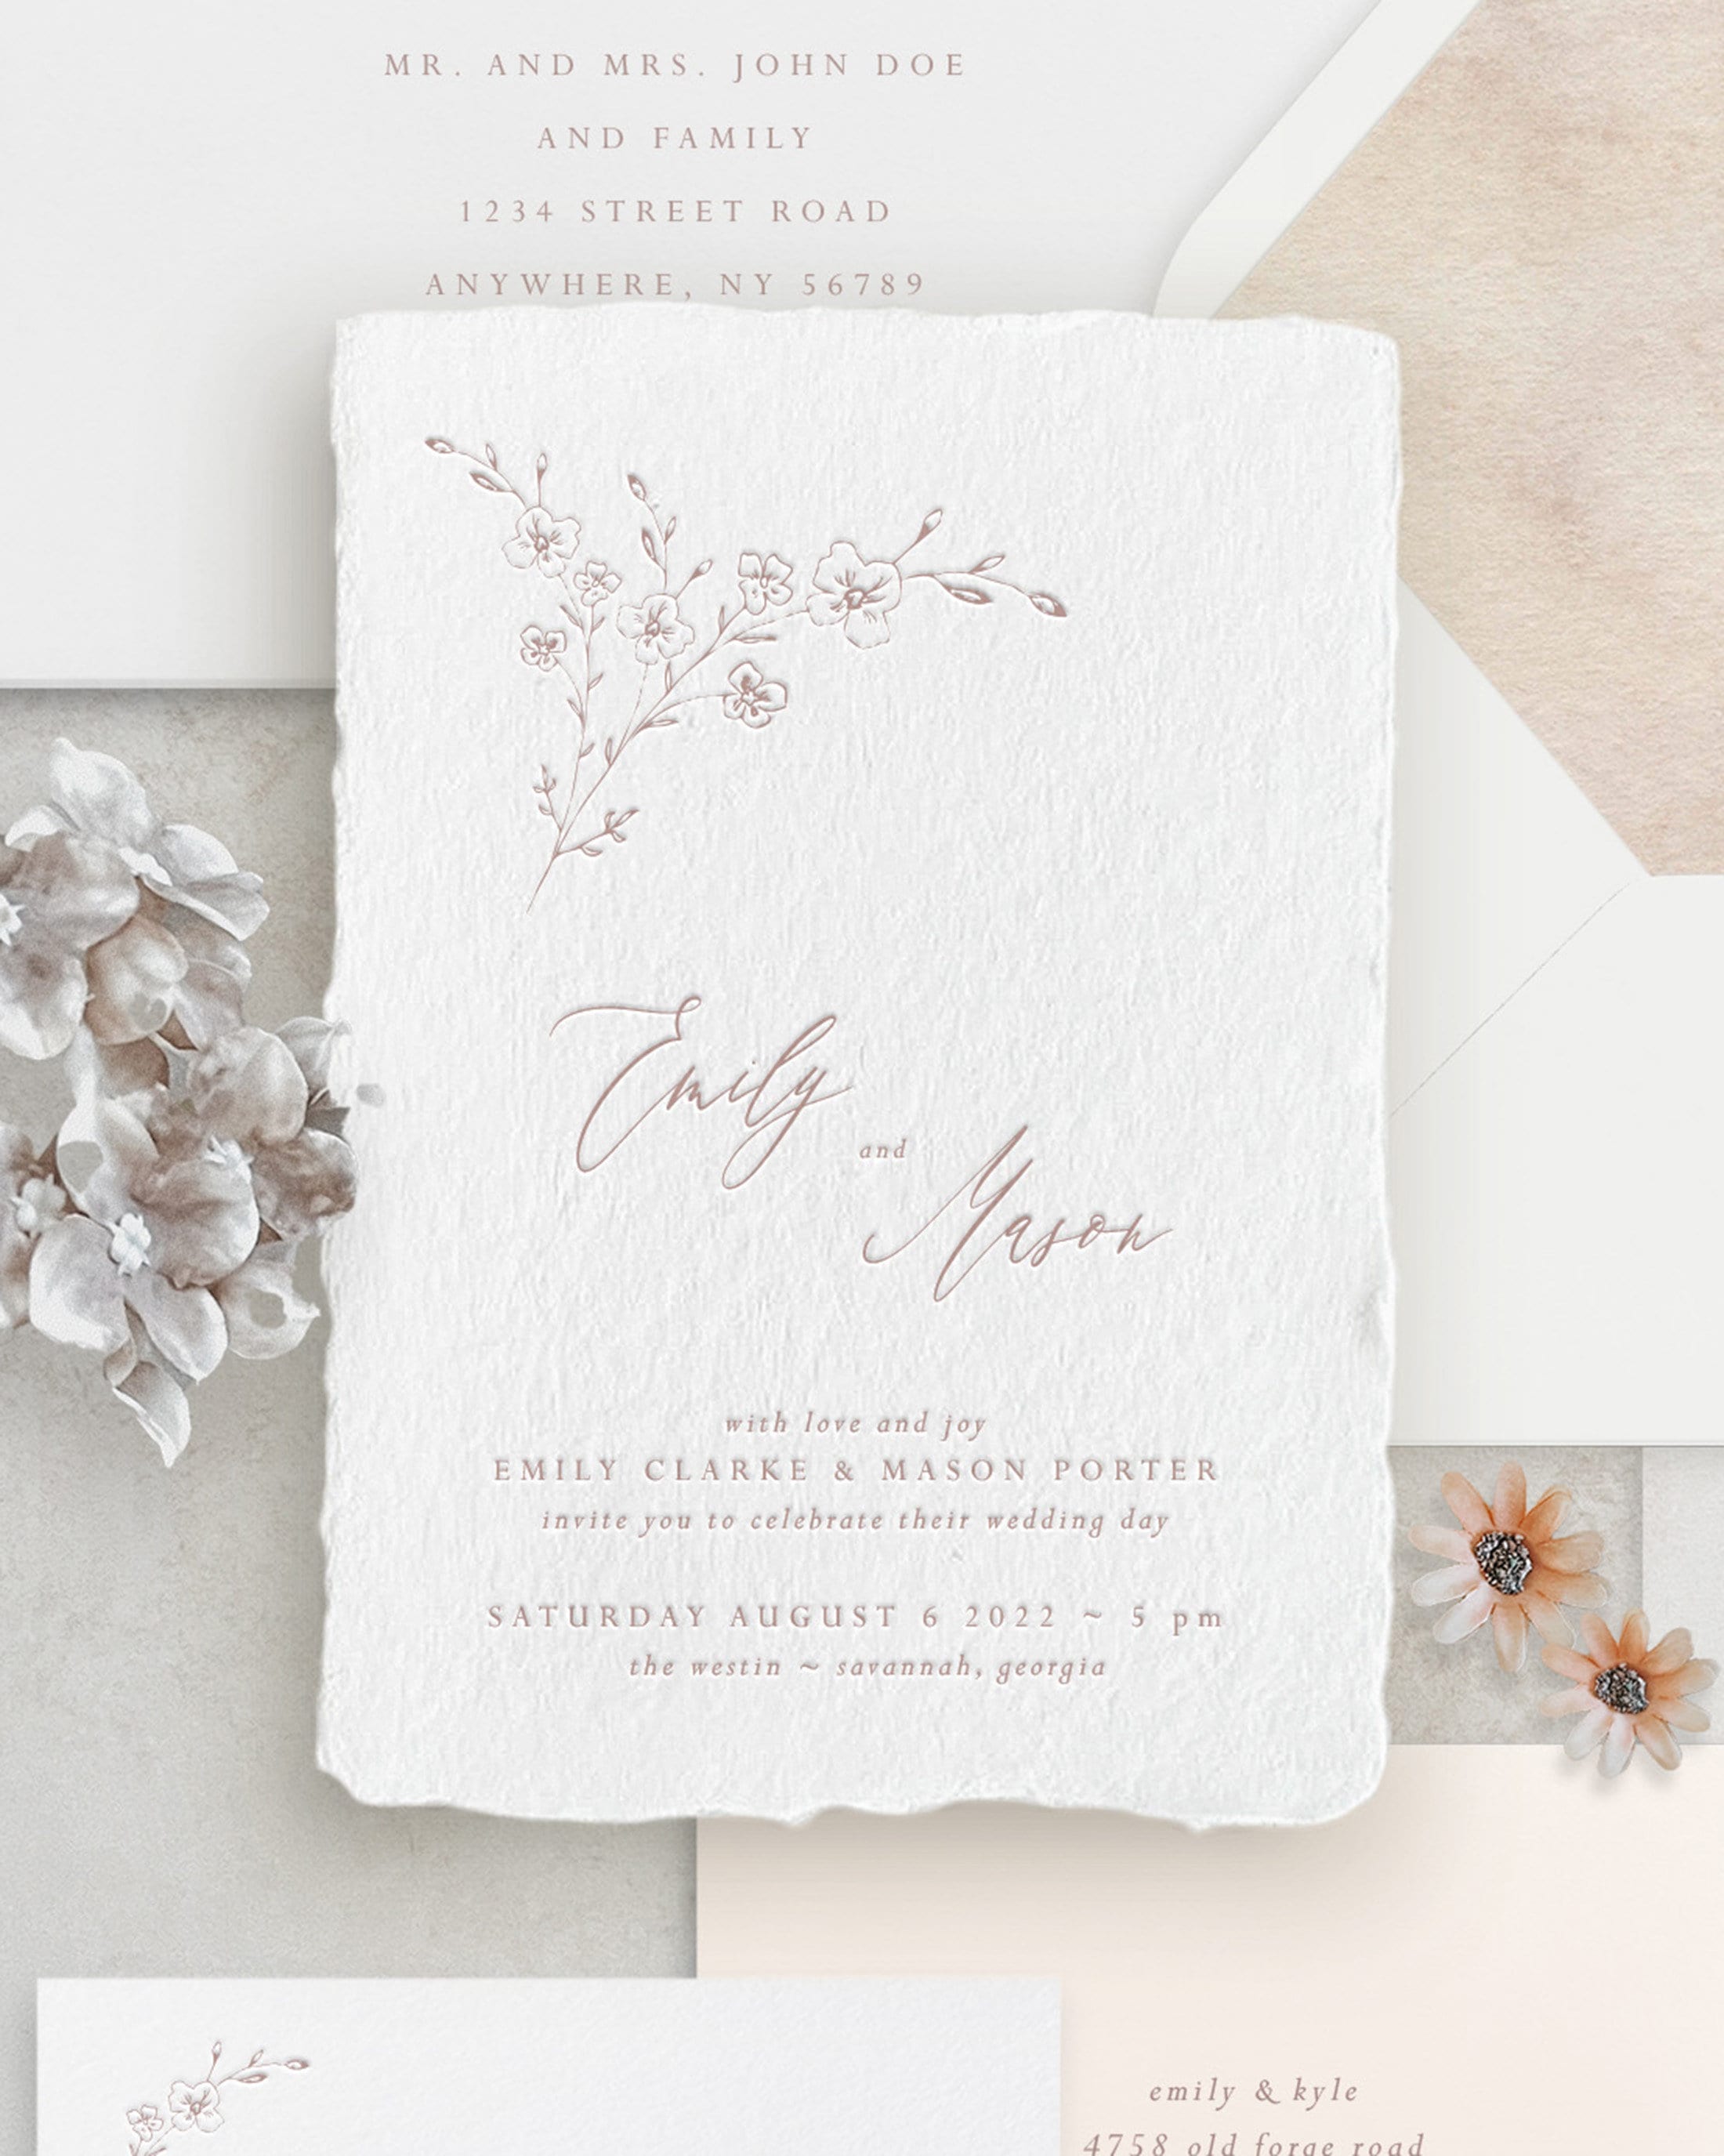 Minimalist modern simple save the date cards STD005 - Wedding Invitations -  Wedding Invites Paper